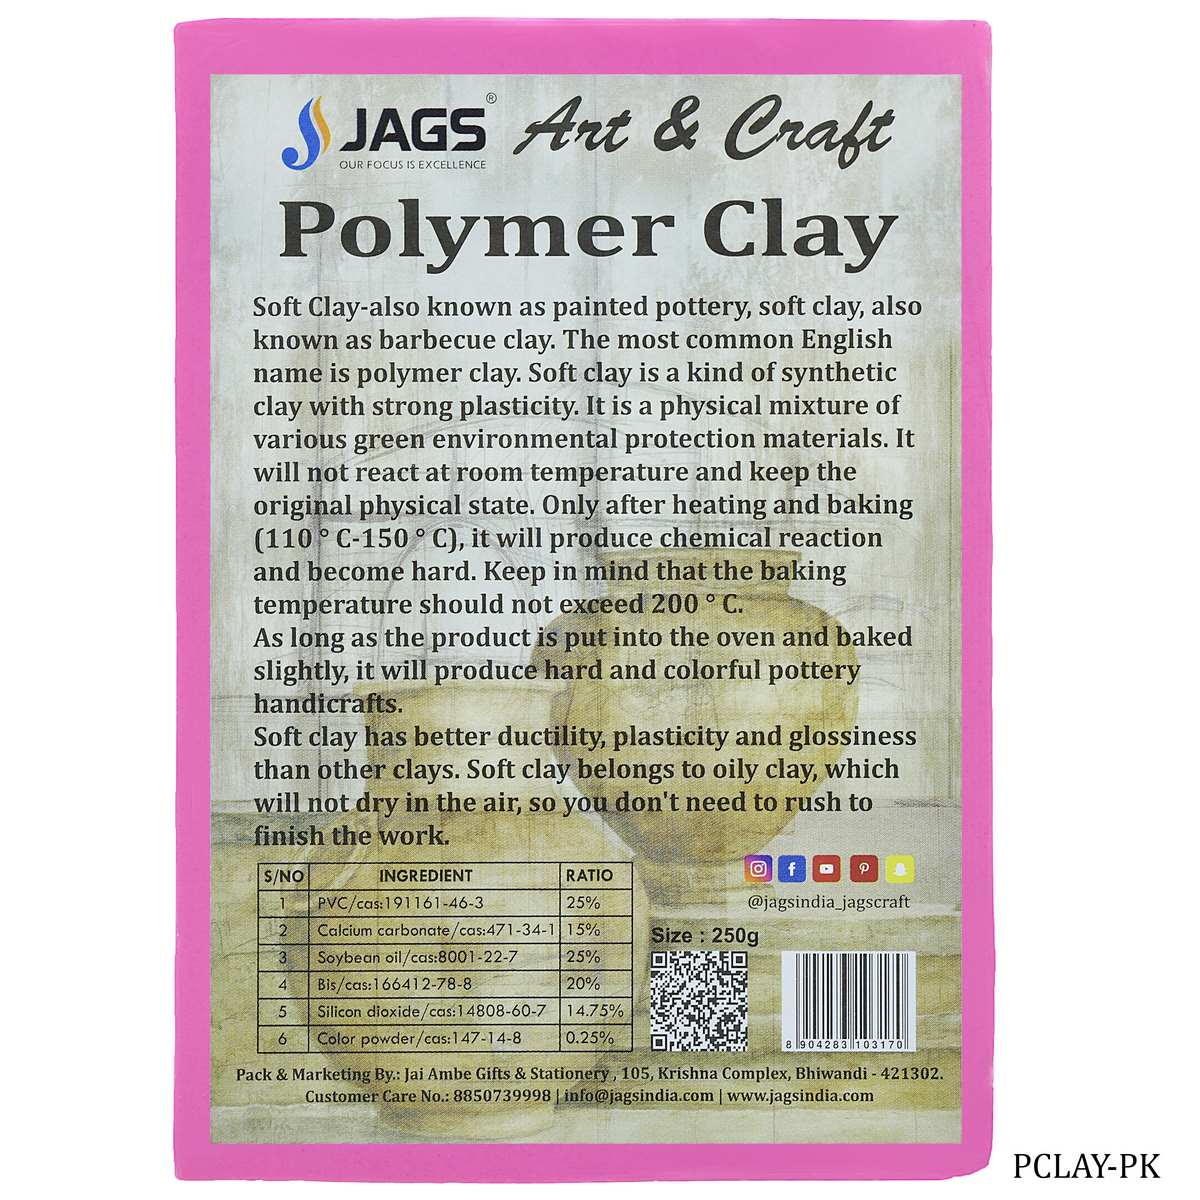 jags-mumbai Clay Polymer Clay 250gm Pink PCLAY-PK